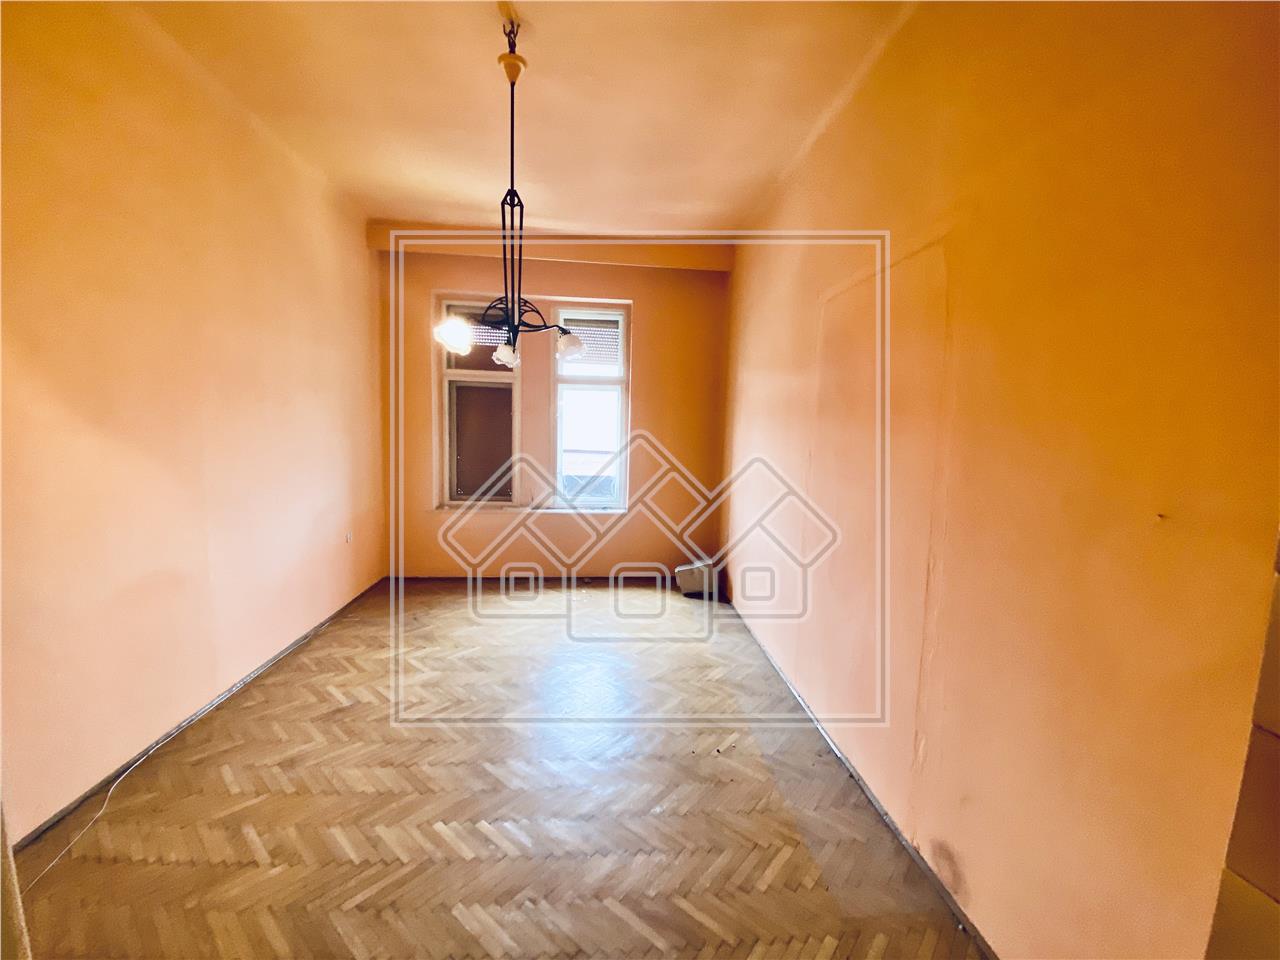 Wohnung  kaufen in Sibiu - ULTRACENTRALA Bereich